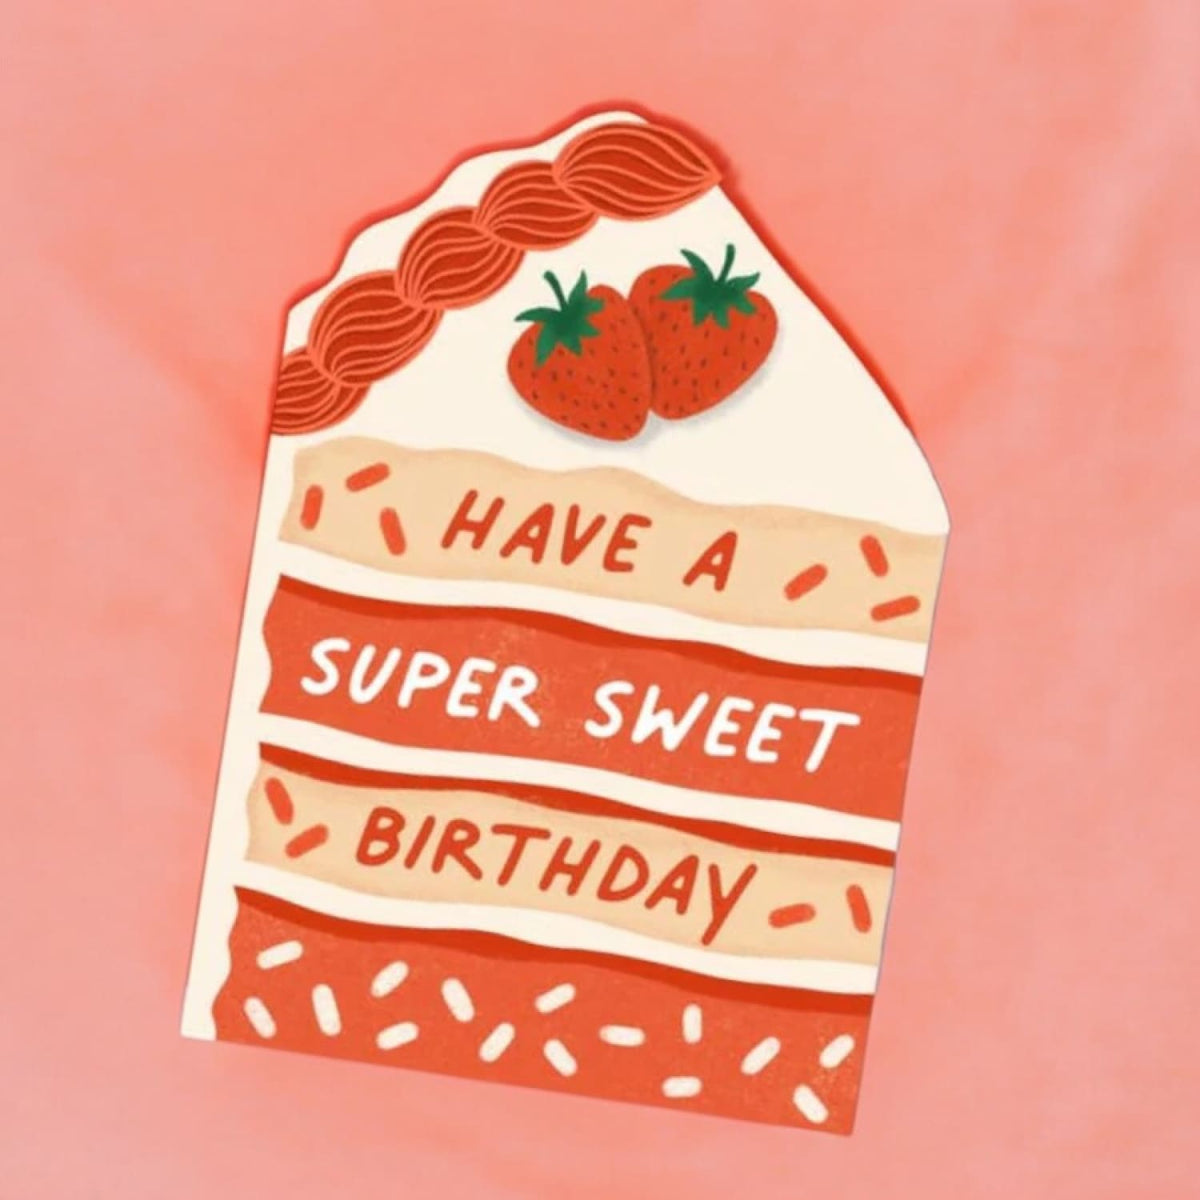 Super Sweet Birthday Cake Greeting Card Birthday Cake